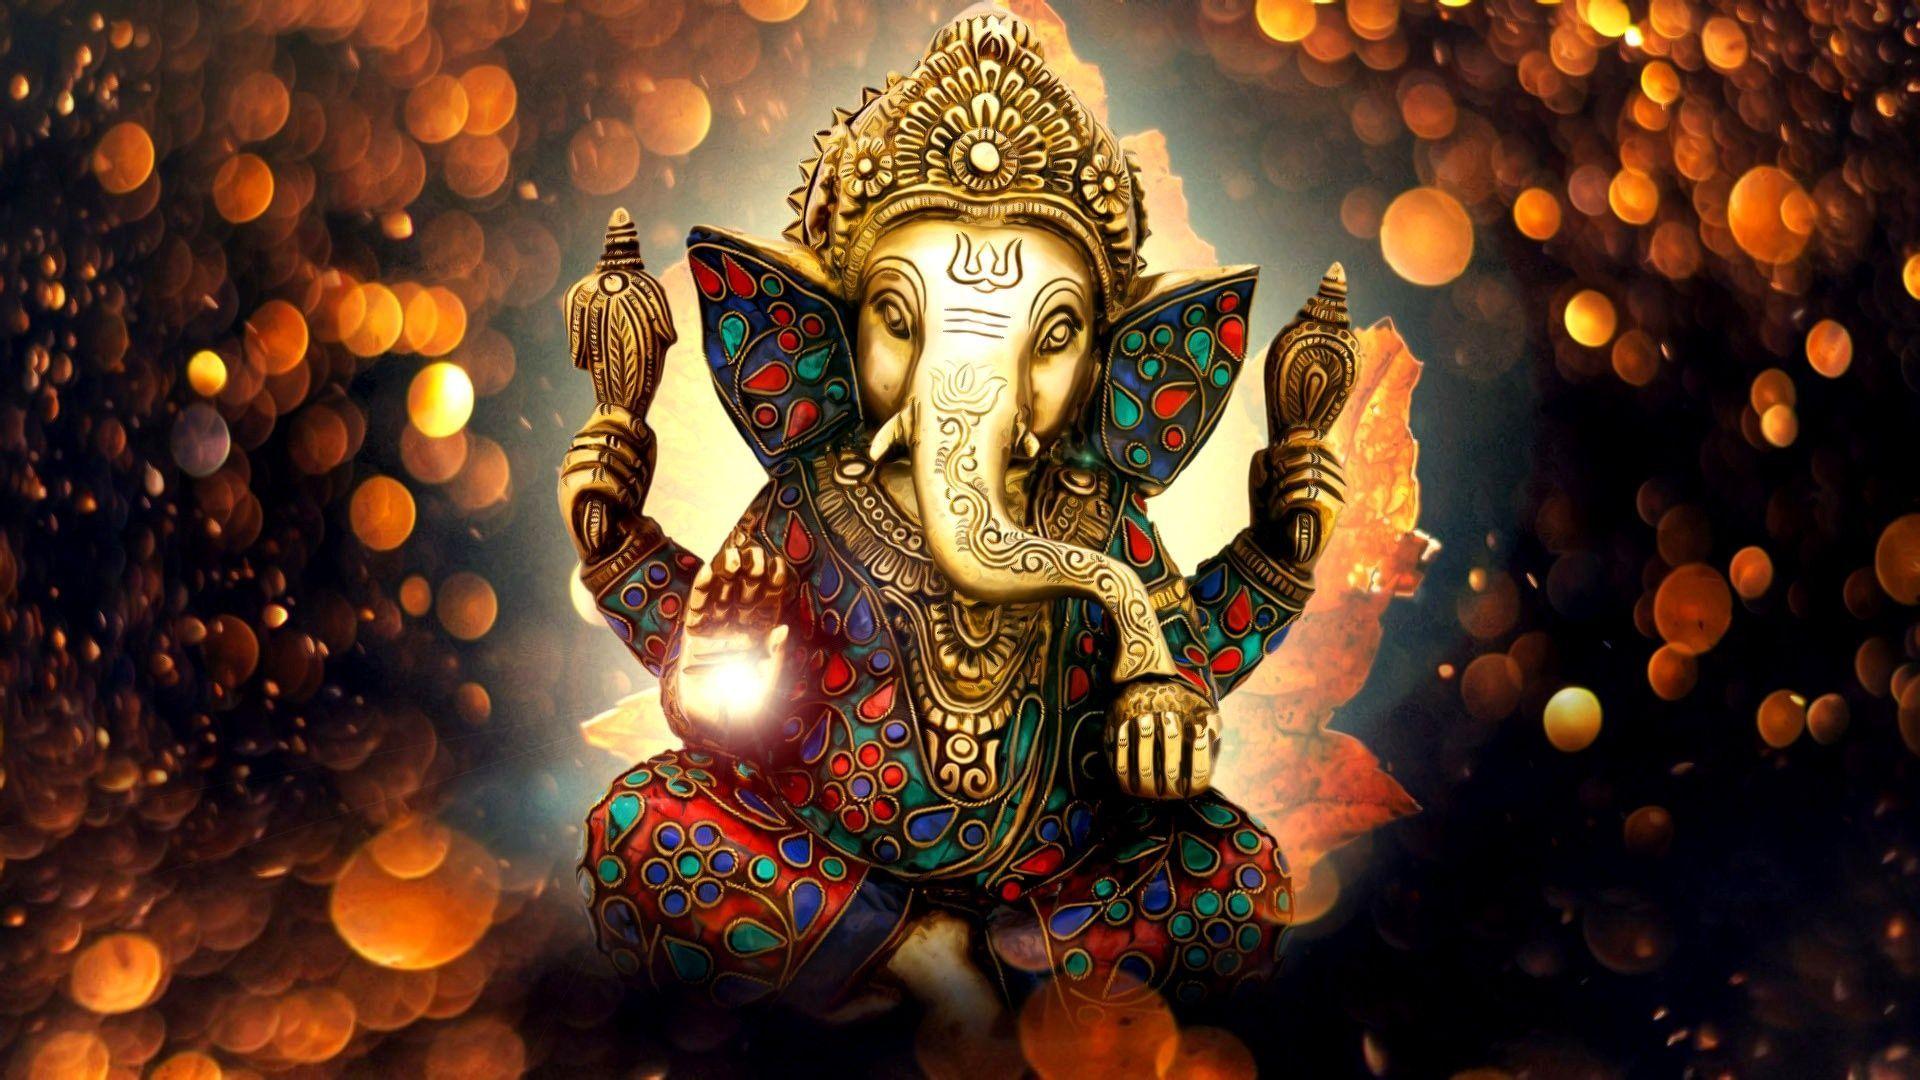 310 Ganpati Bappa Images Free Download Full HD Pics Photo Gallery and  Wallpapers 2019  Happy N  Ganesh wallpaper Happy ganesh chaturthi  images Ganesh lord